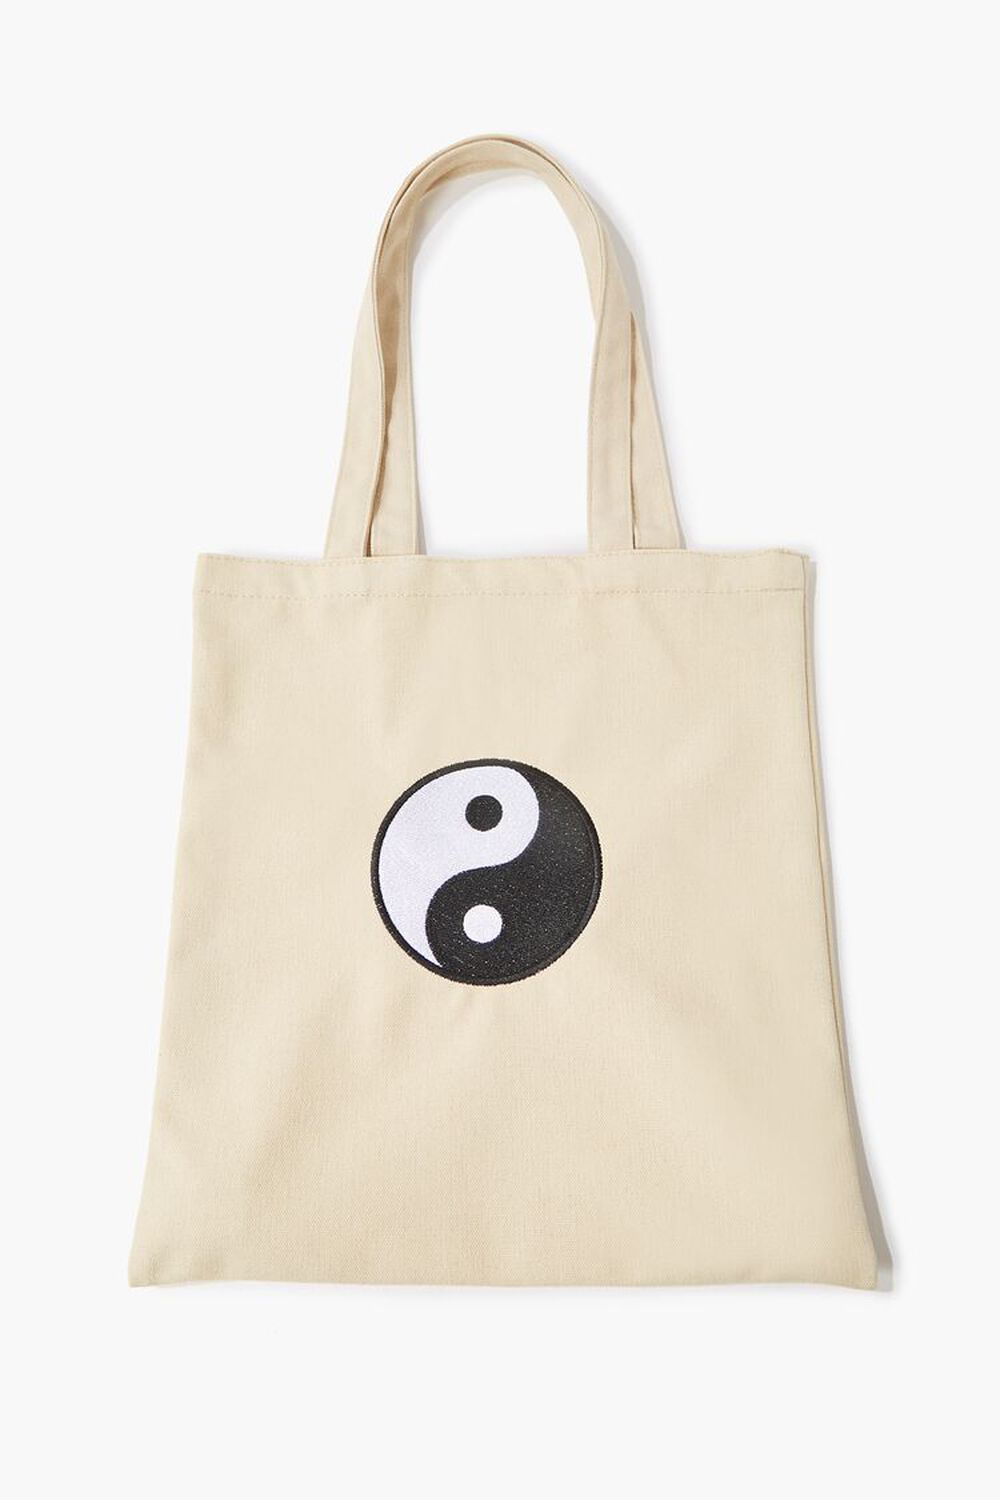 NATURAL/MULTI Yin Yang Graphic Tote Bag, image 1